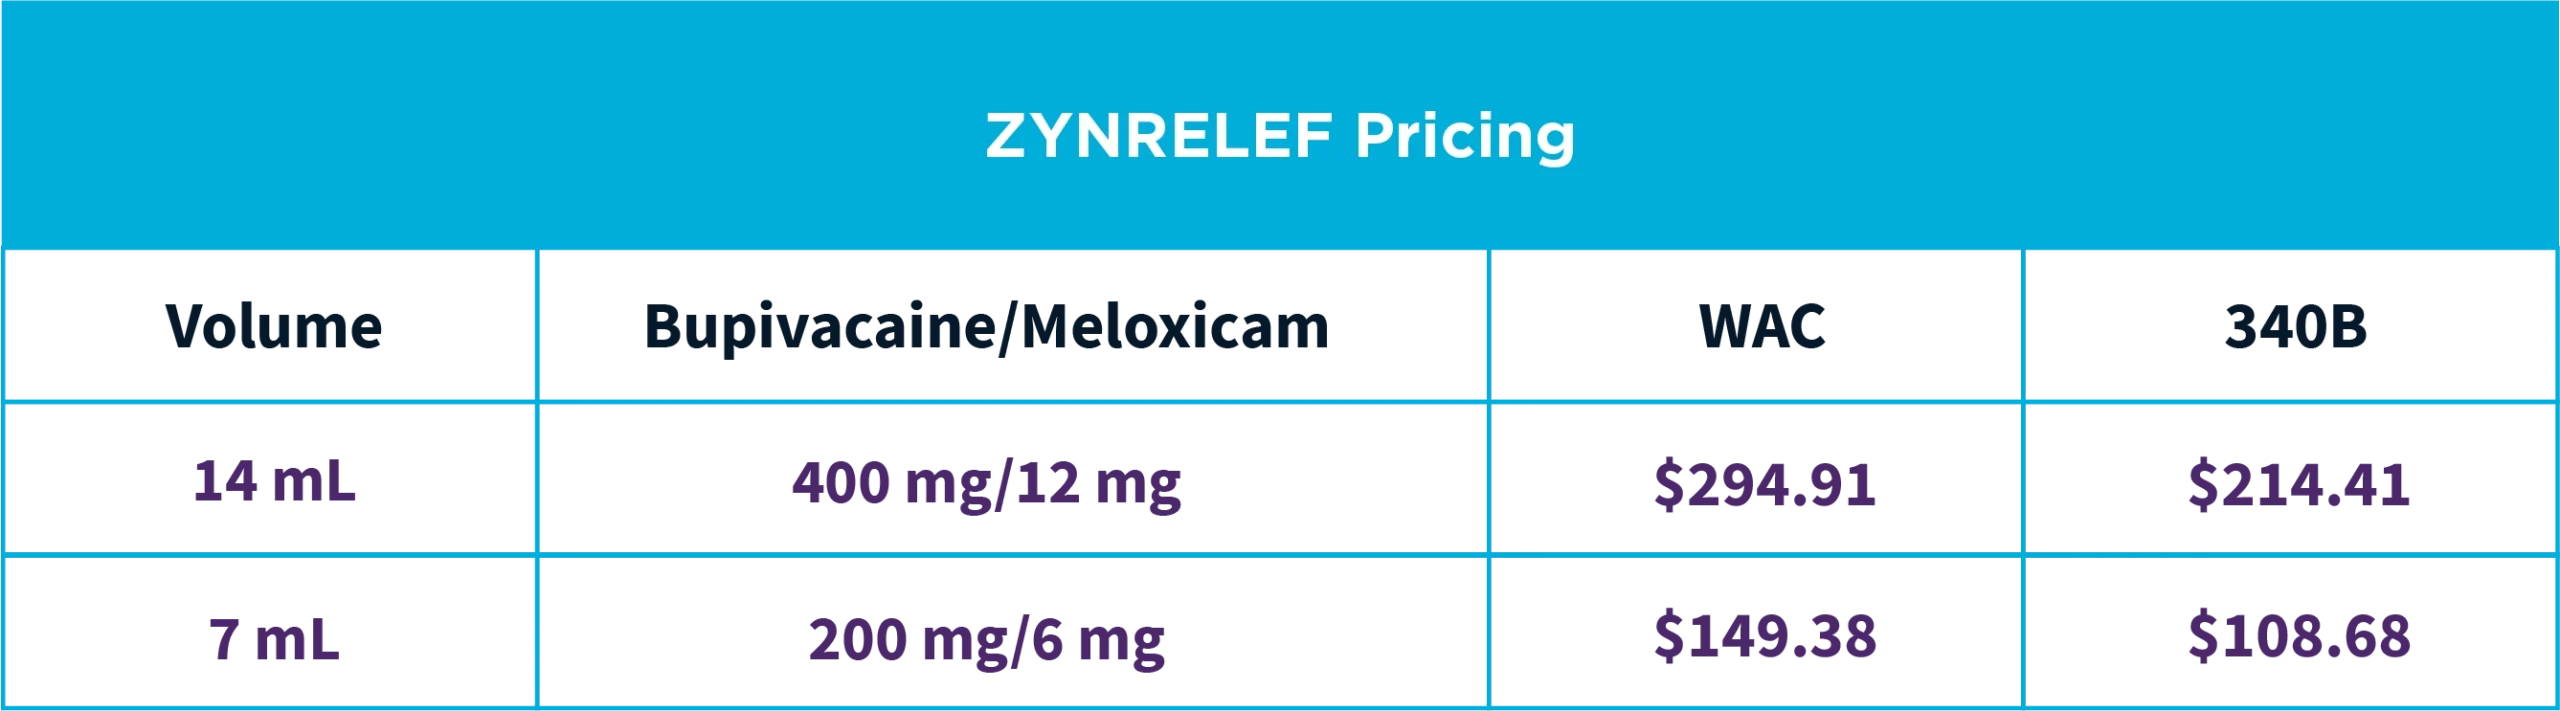 ZYNRELEF pricing table: 14-mL WAC = $267.50; 14-mL 340B = $203.57; 7-mL WAC = $135.50; 7-mL 340B = $103.12.